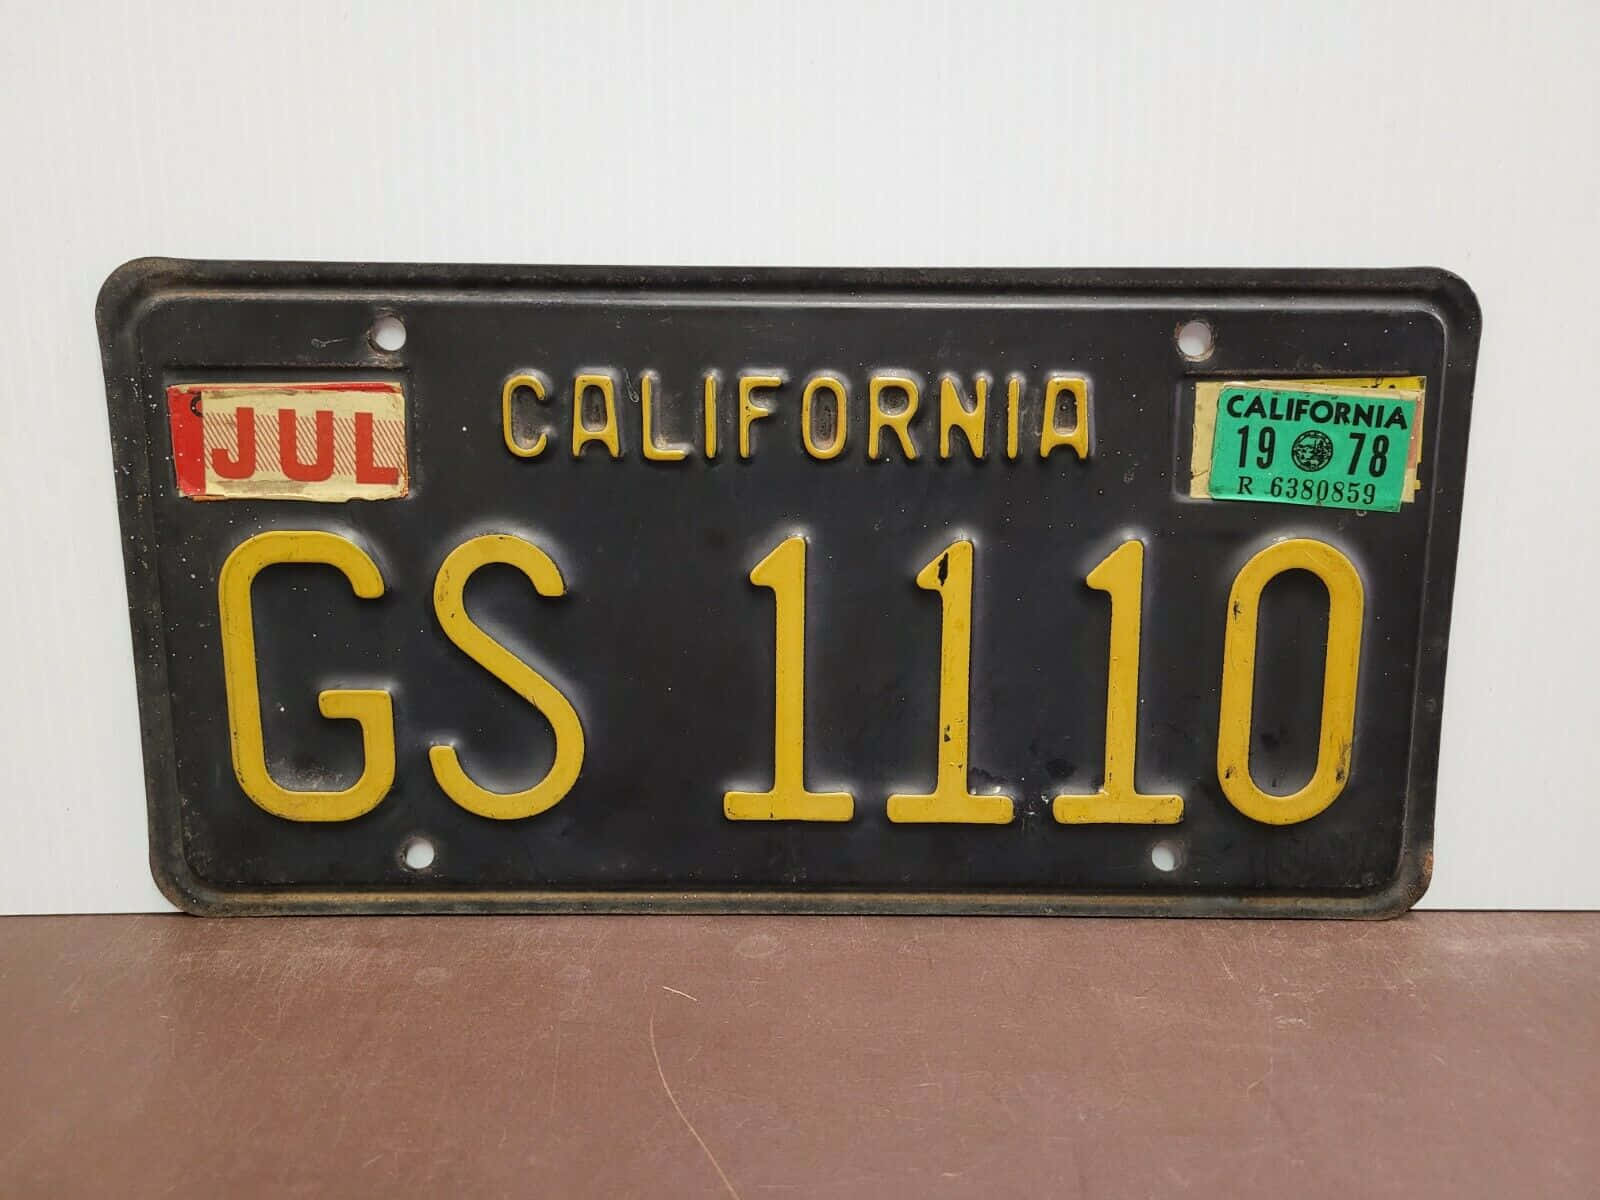 Muralde Placas De Licencia De California Gs110